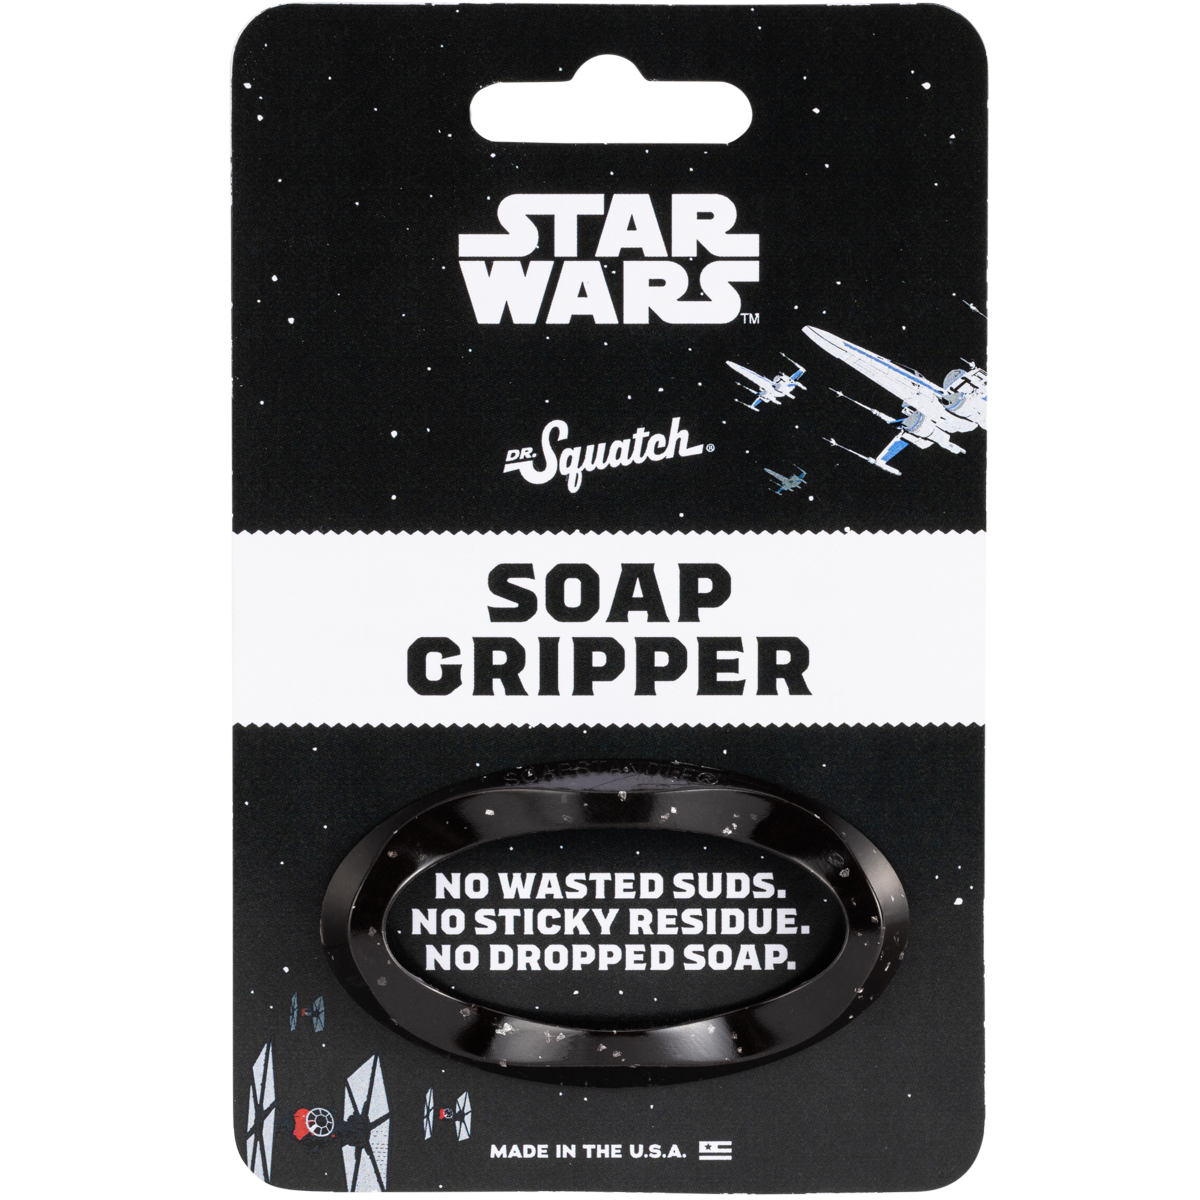 Dr. Squatch Soap Gripper – Southern Hanger